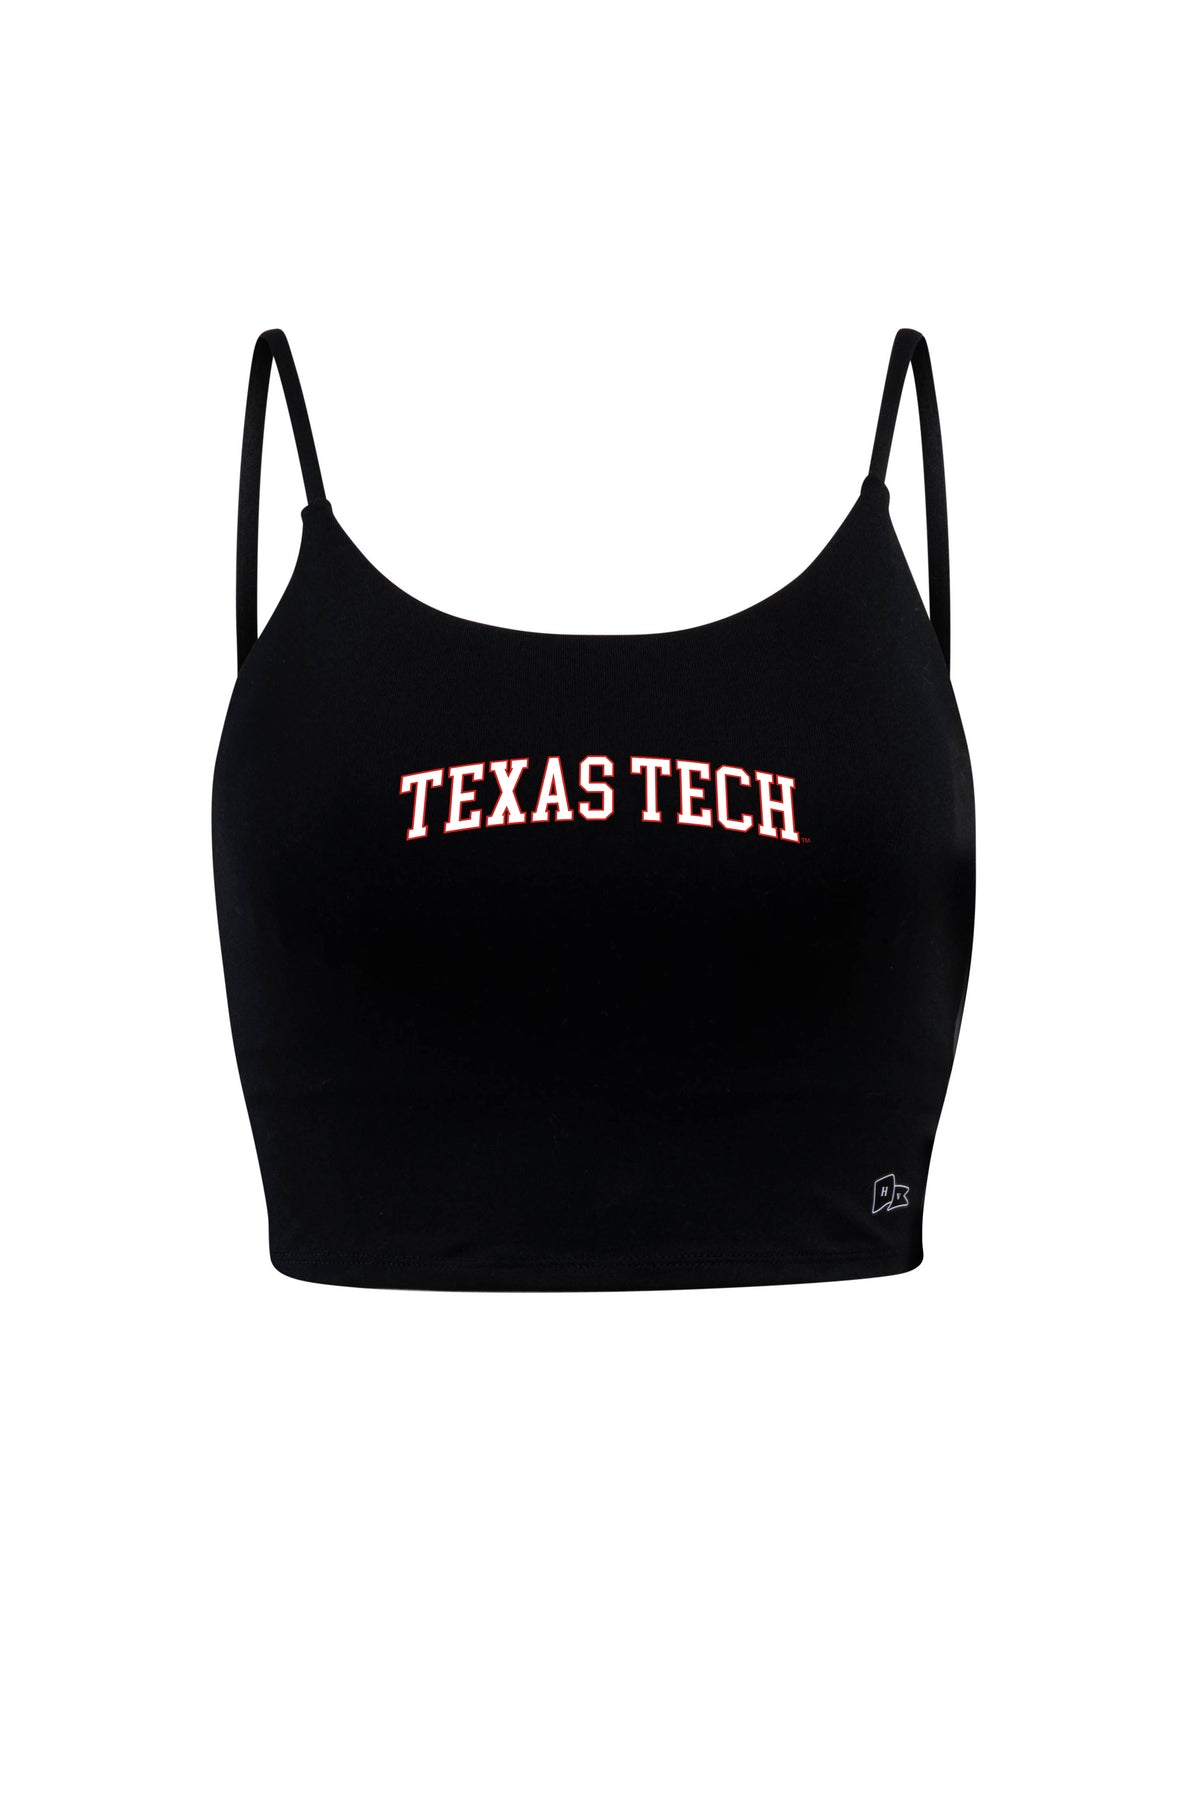 Texas Tech University Bra Tank Top